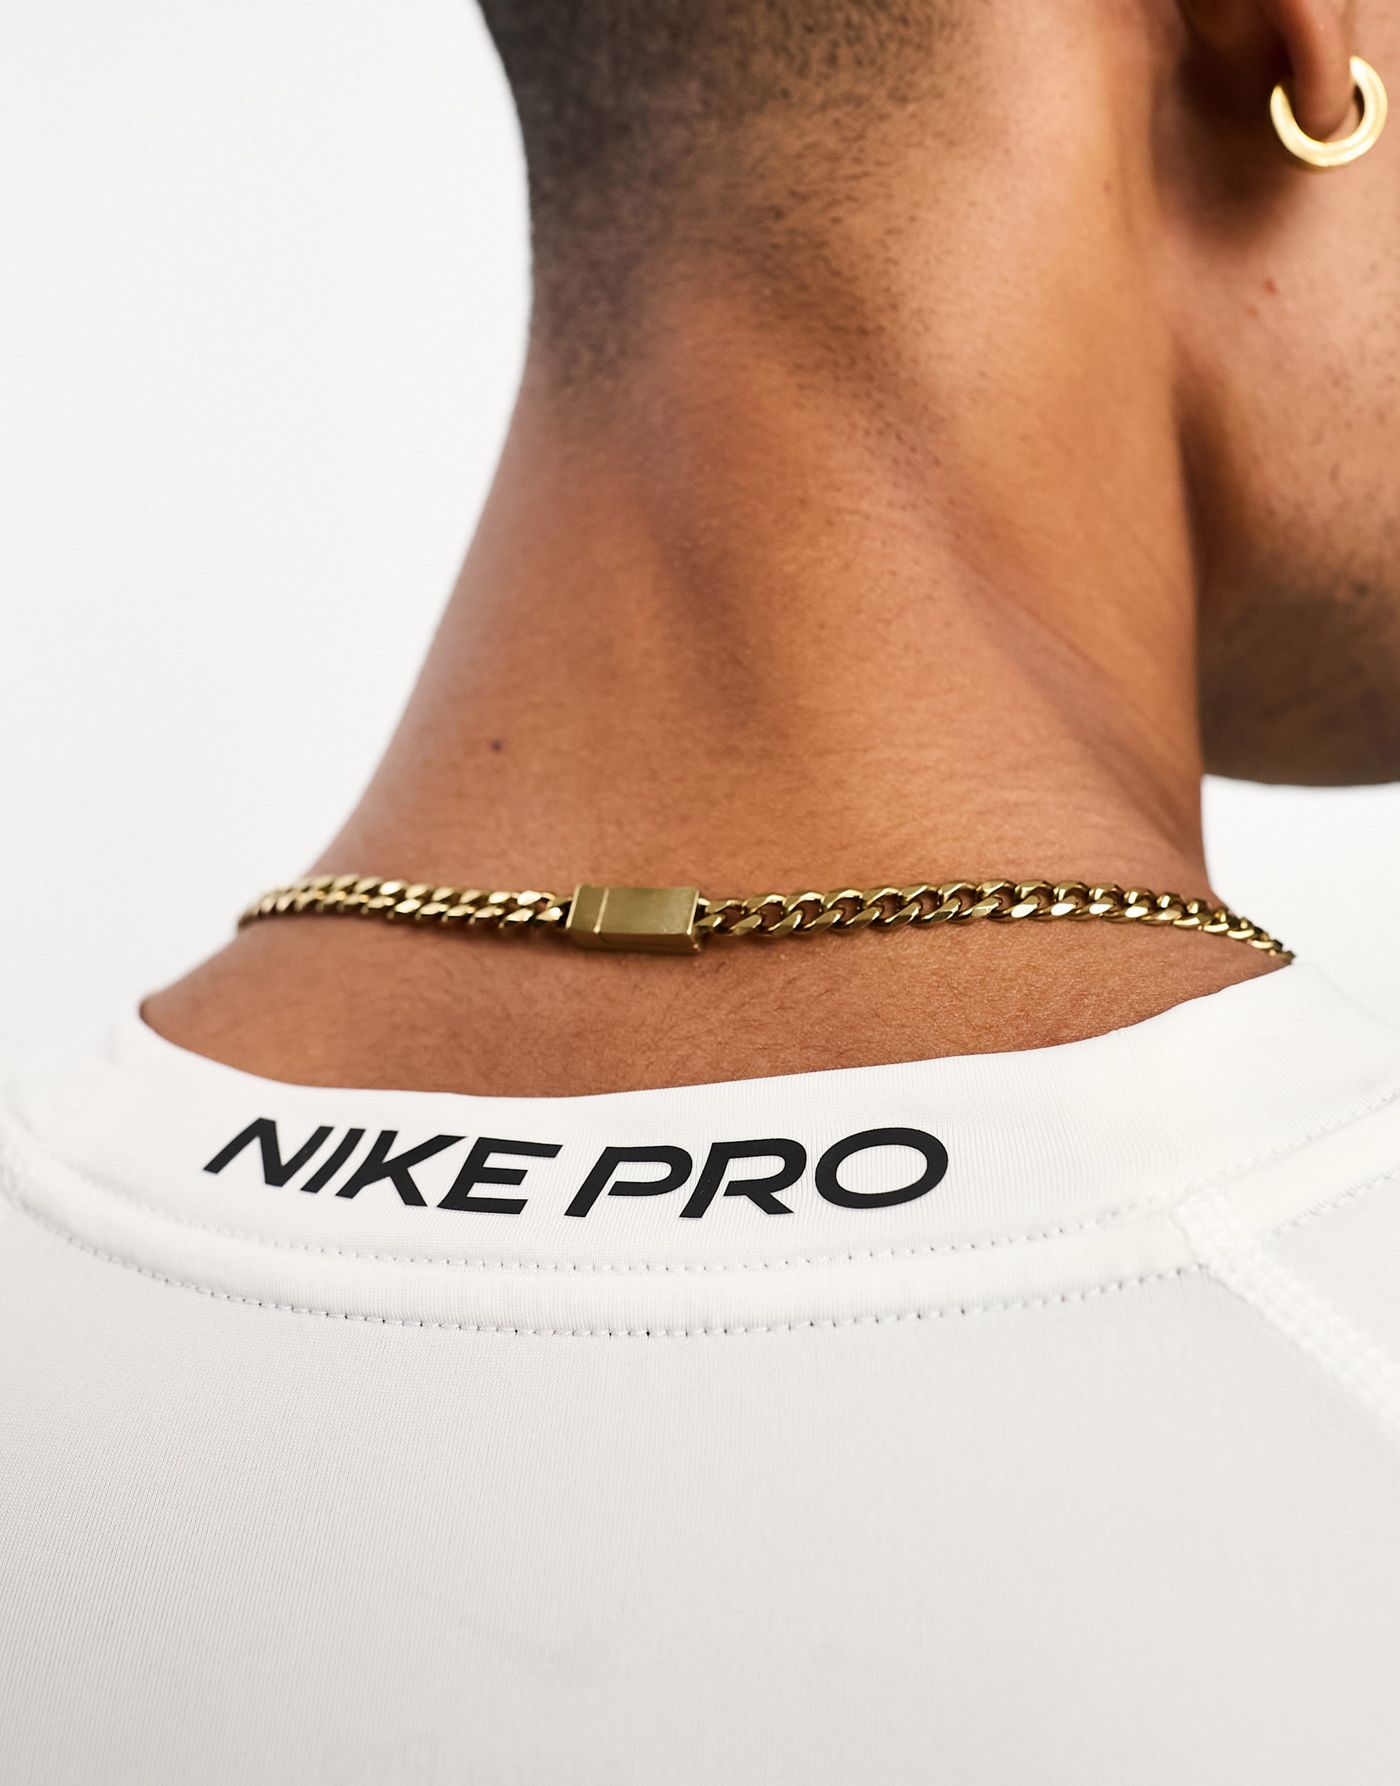 Nike Training Pro Dri-FIT tight t-shirt in white